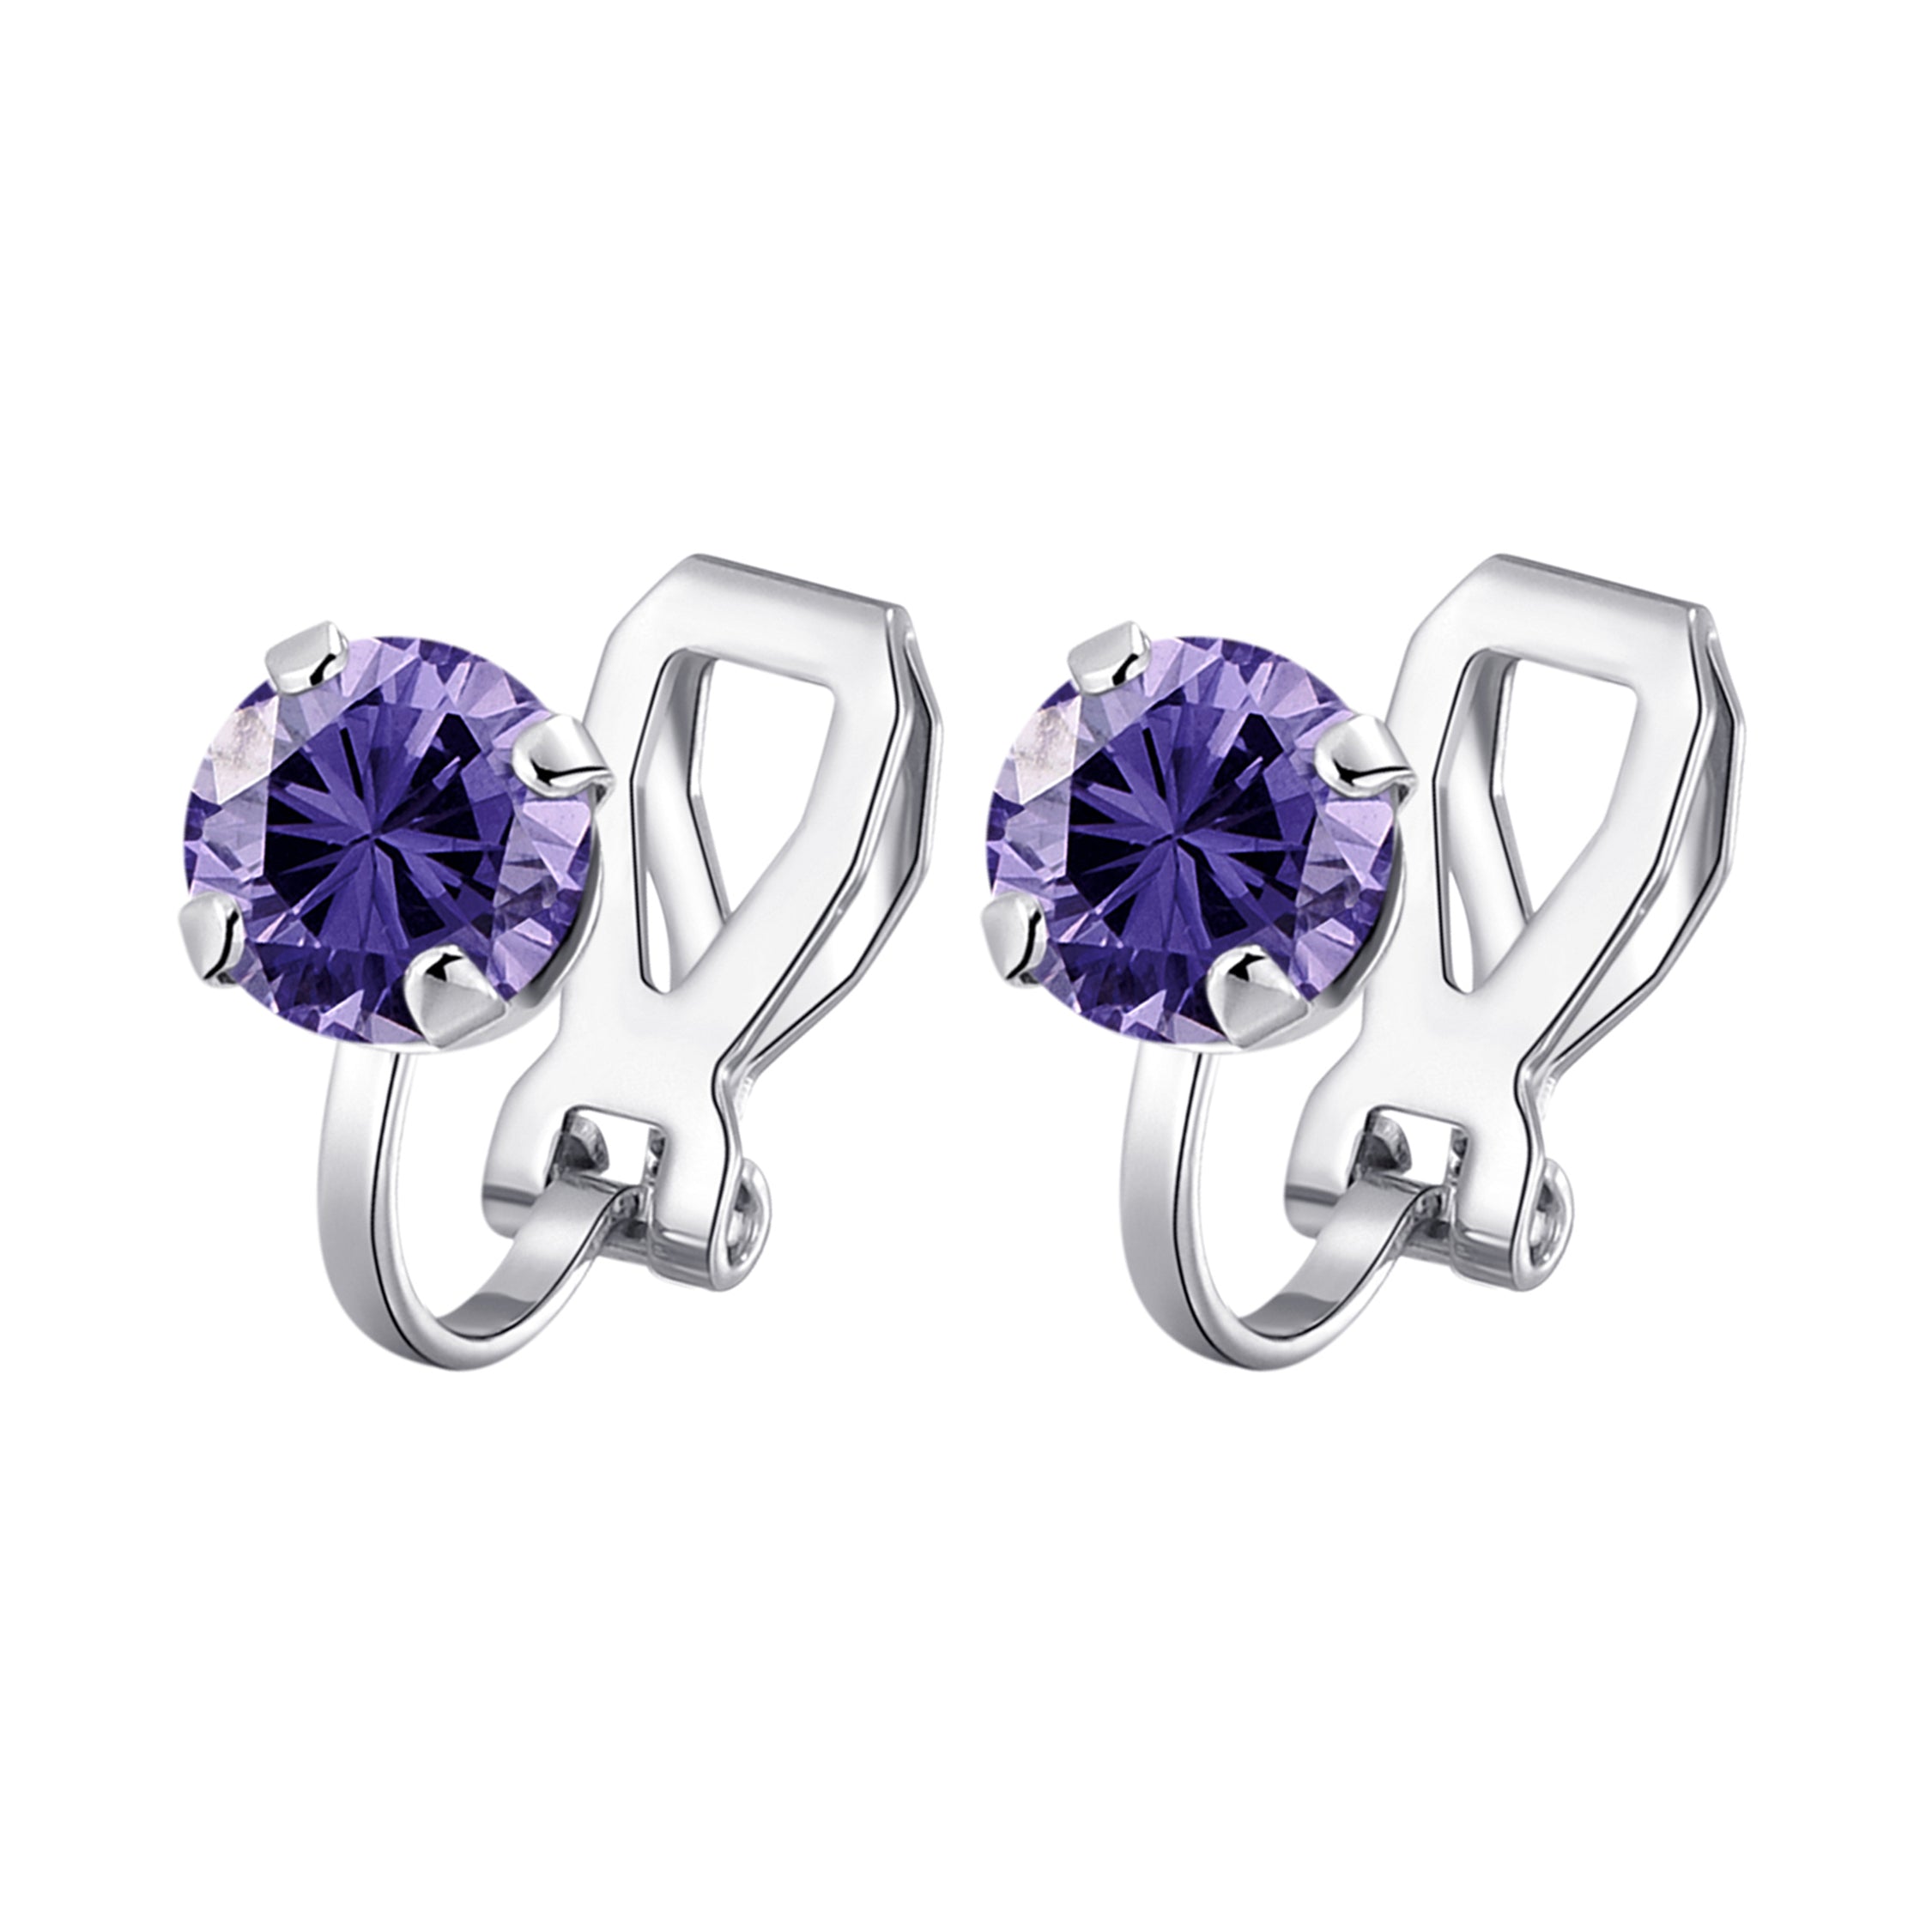 Light Purple Crystal Clip On Earrings Created with Zircondia® Crystals by Philip Jones Jewellery